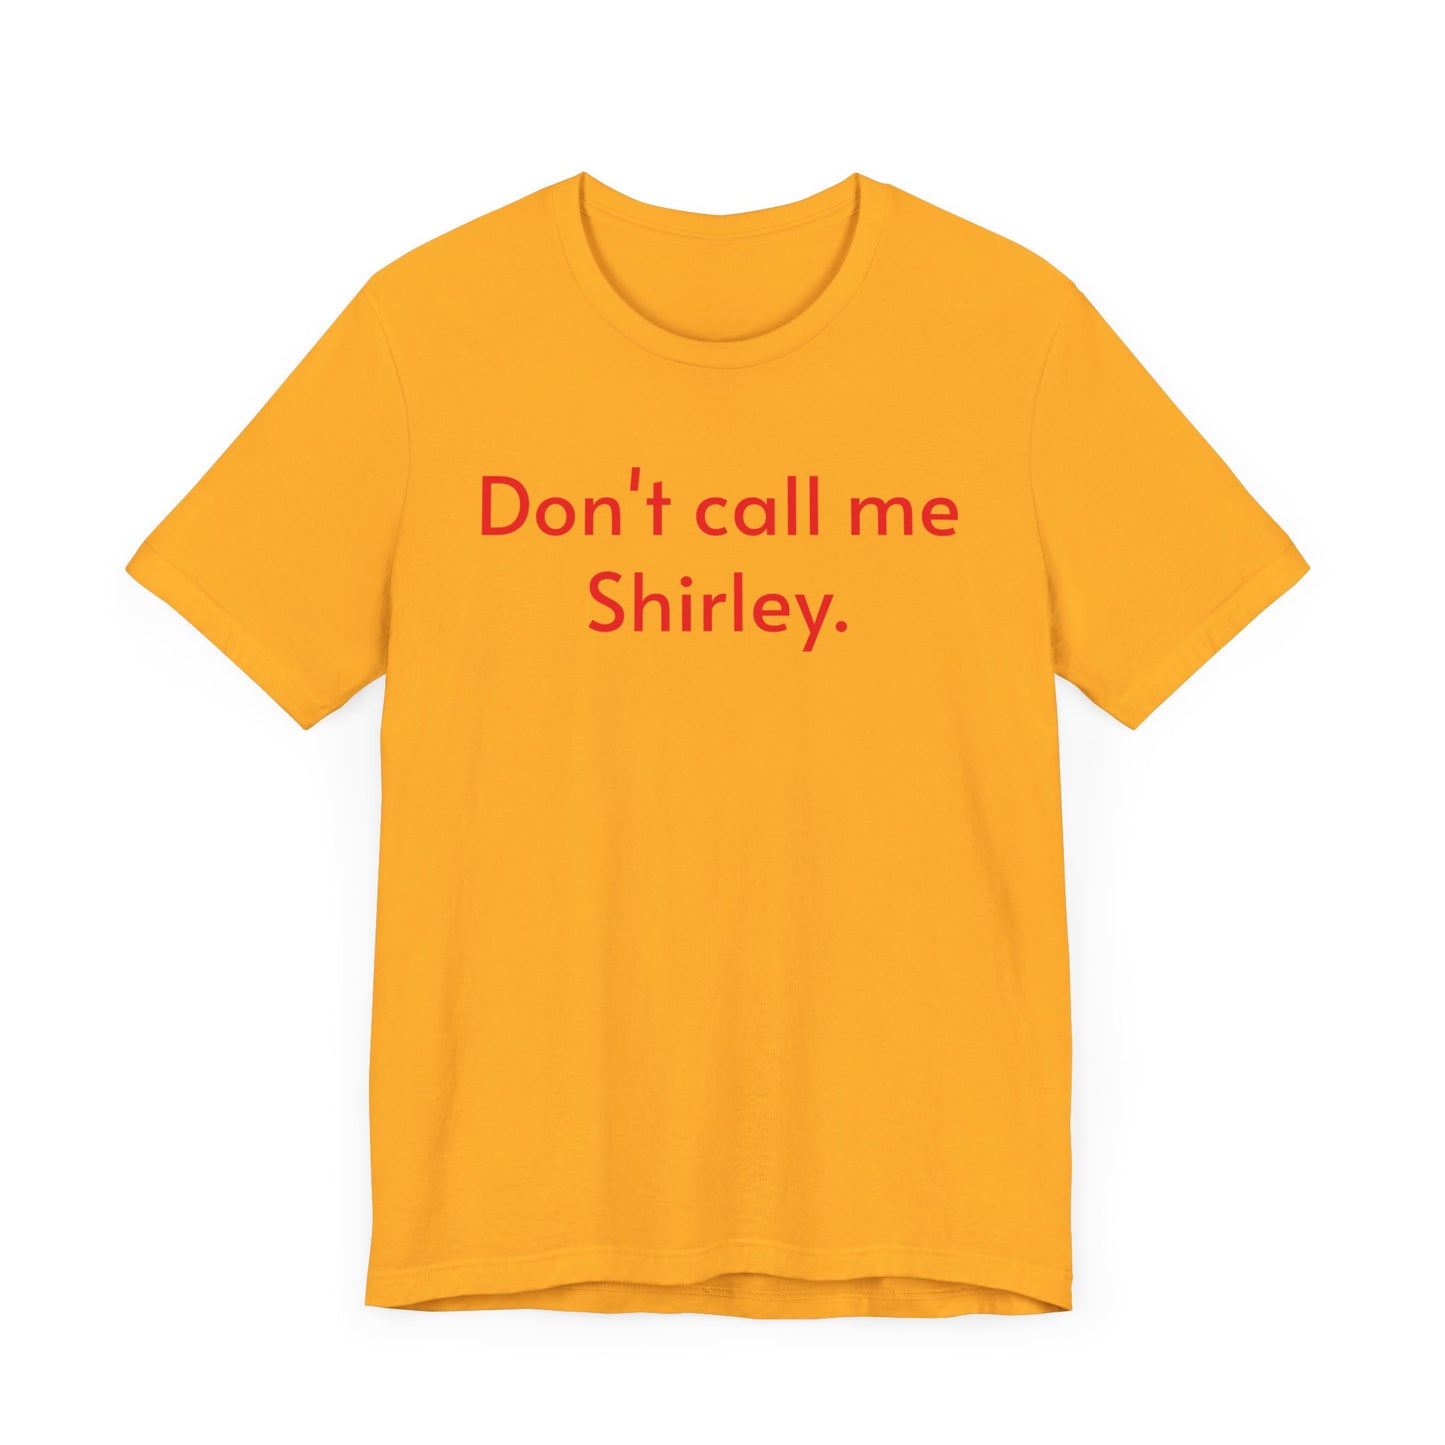 Don't call me Shirley.